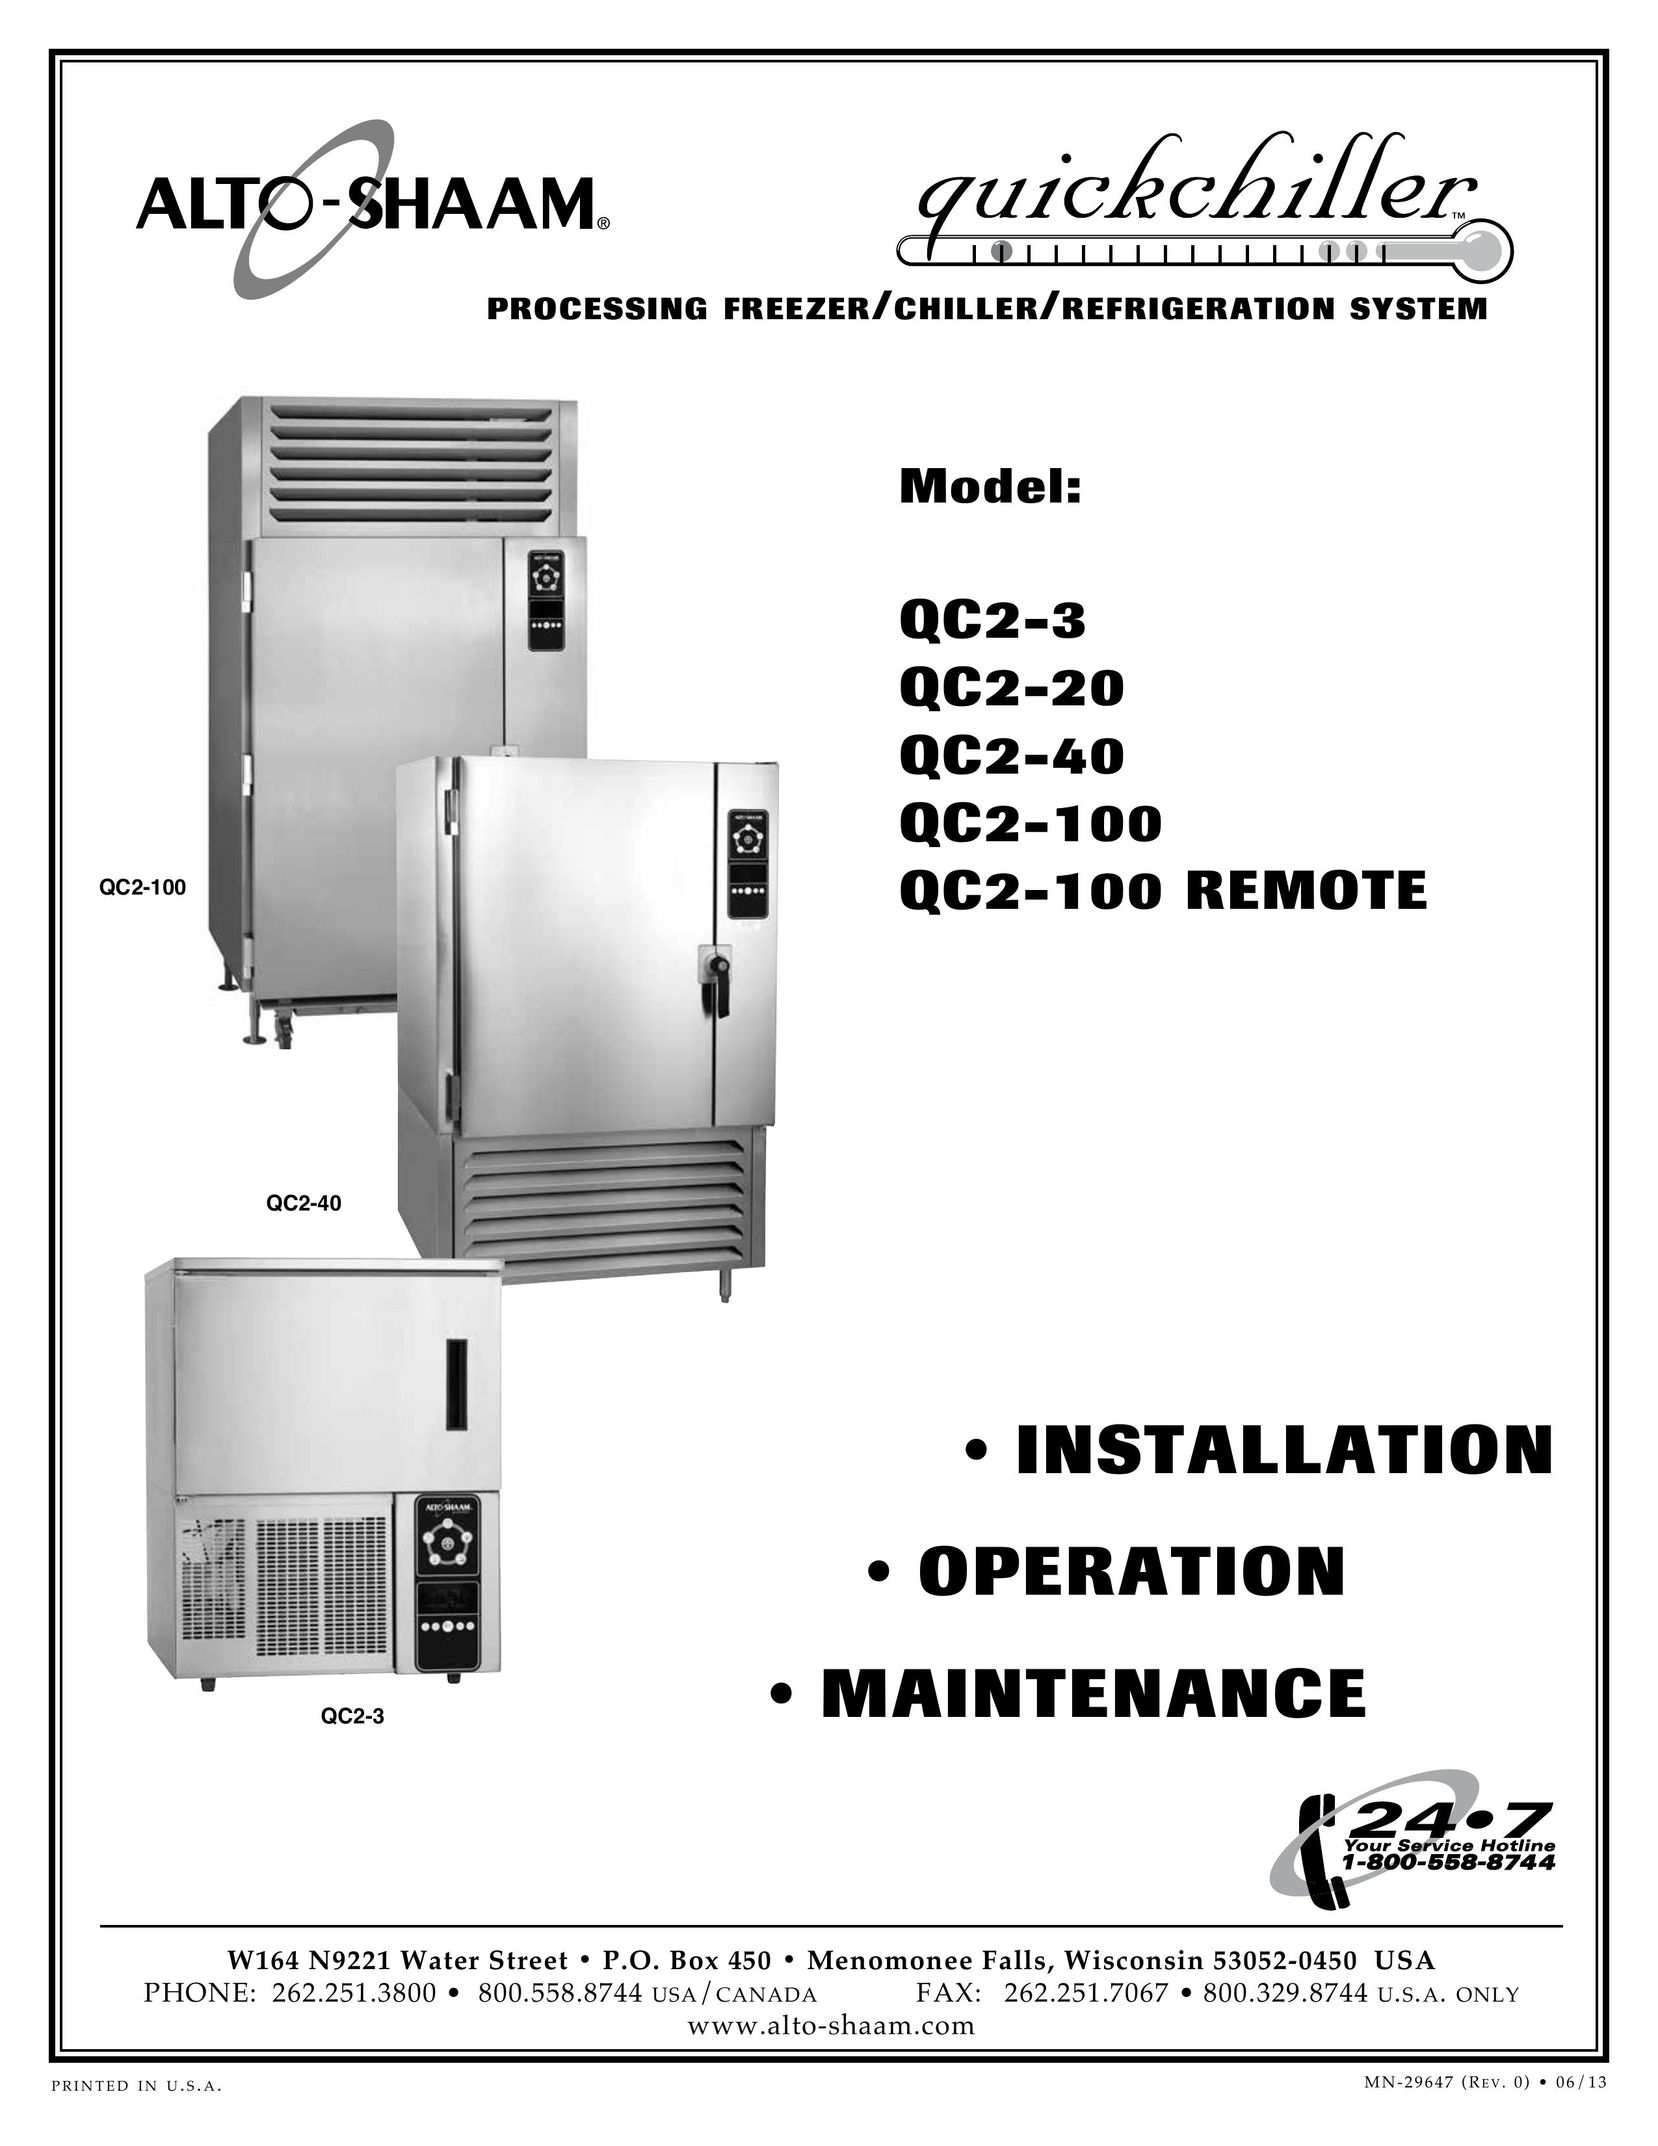 Alto-Shaam Quickchiller Processing Freezer/Chiller/Refrigeration System Freezer User Manual